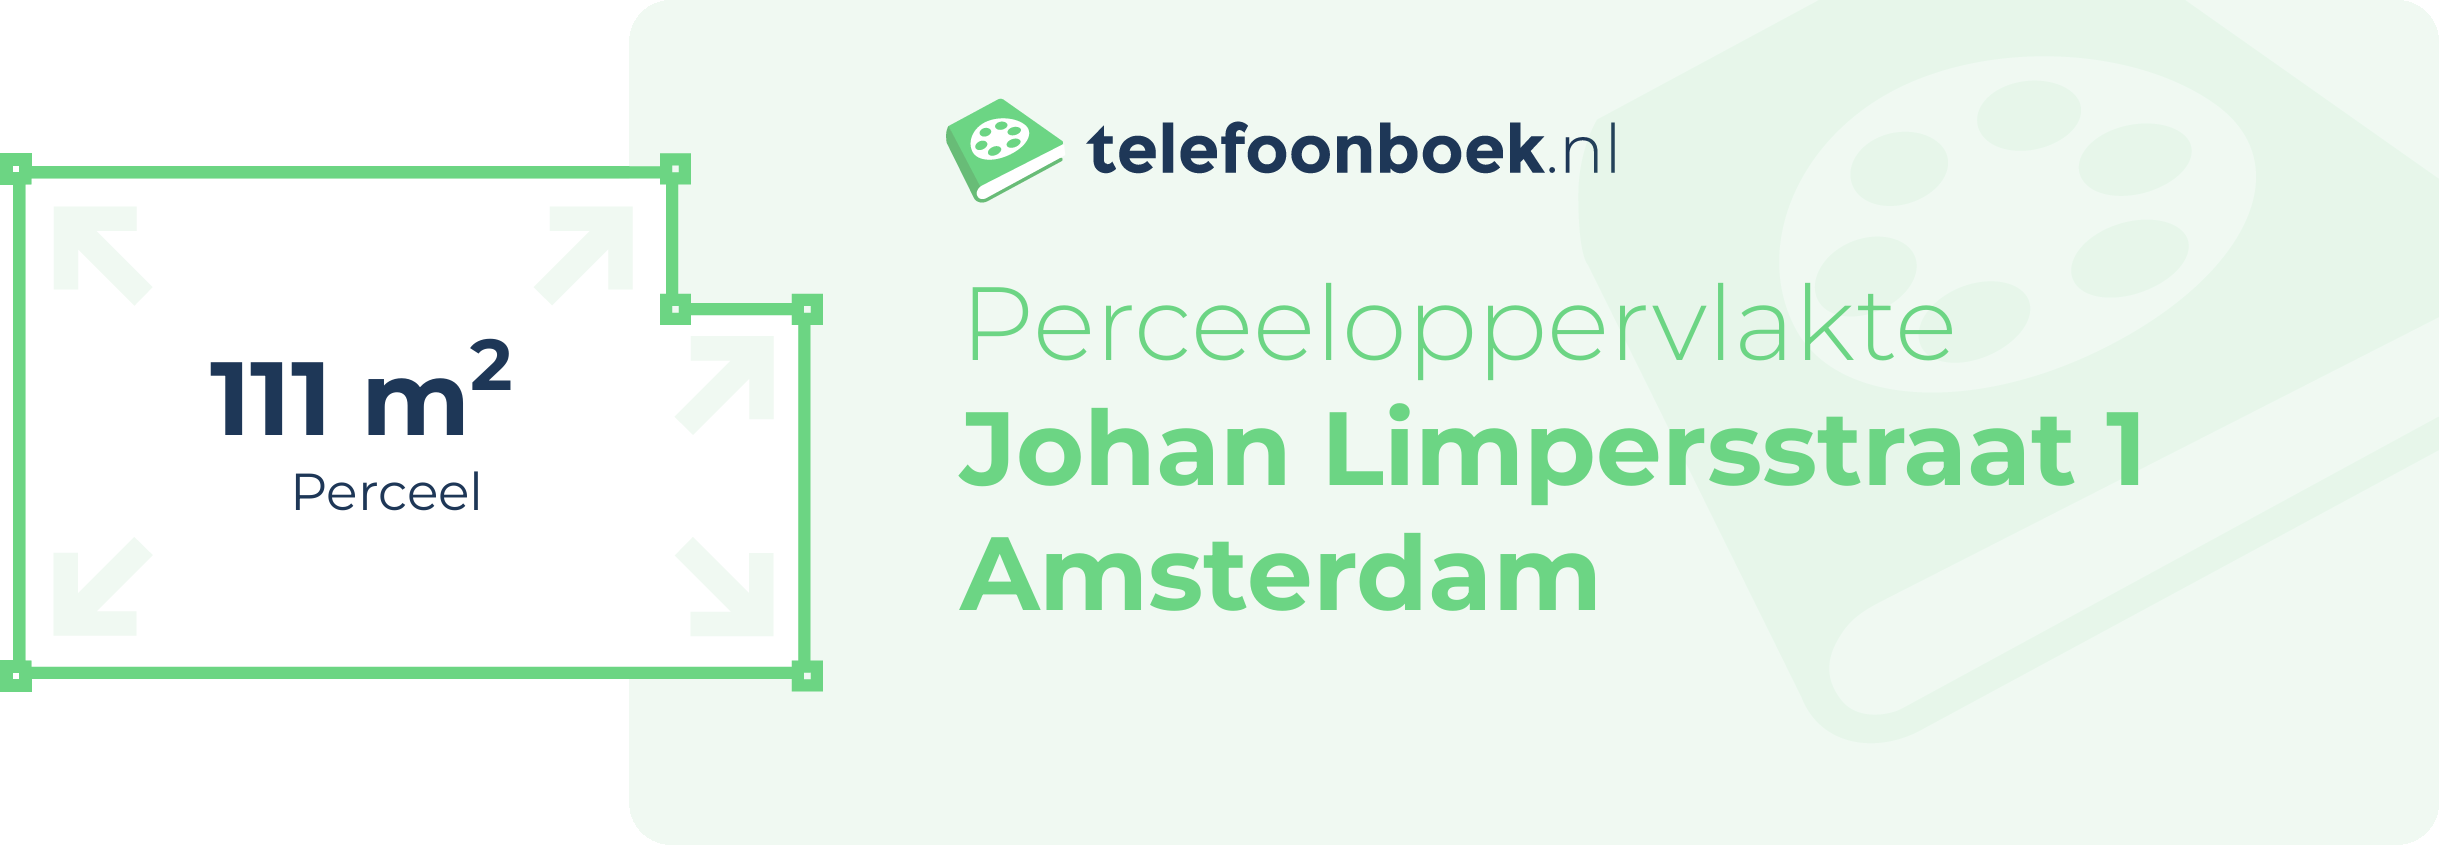 Perceeloppervlakte Johan Limpersstraat 1 Amsterdam